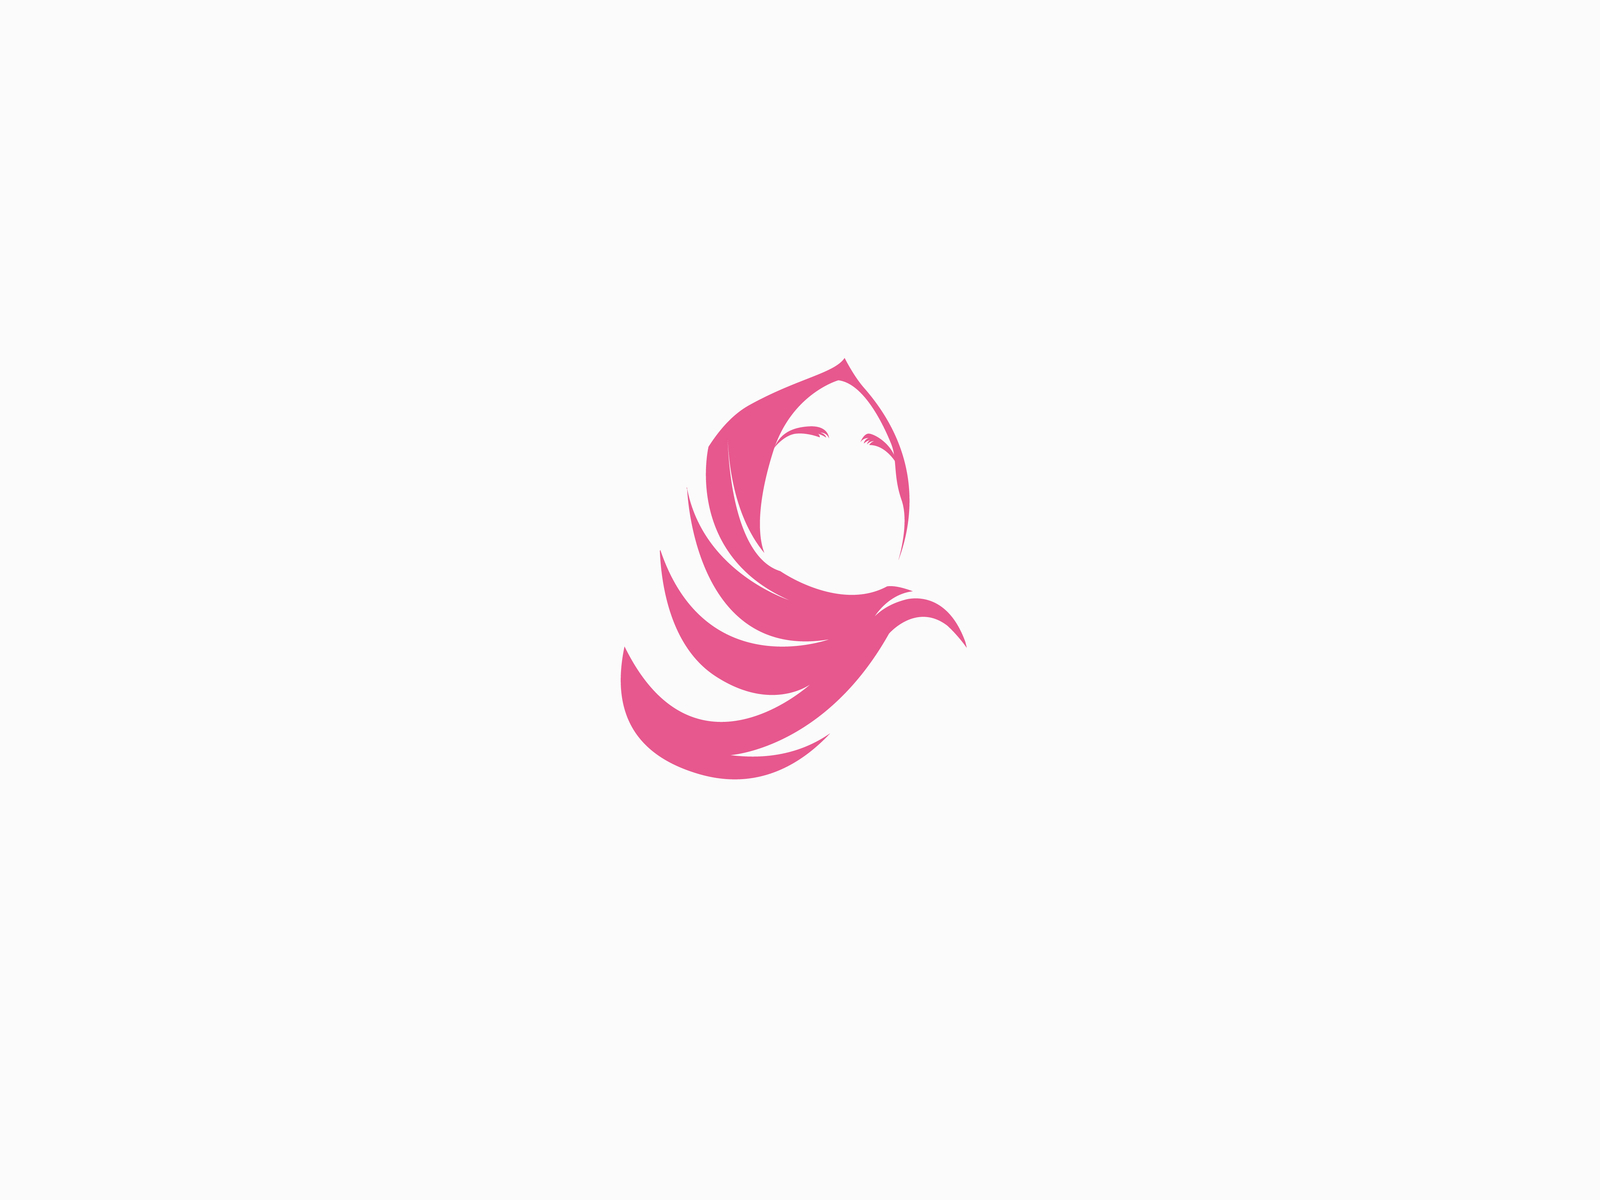  Hijab  logo  concept by RantauCreative on Dribbble